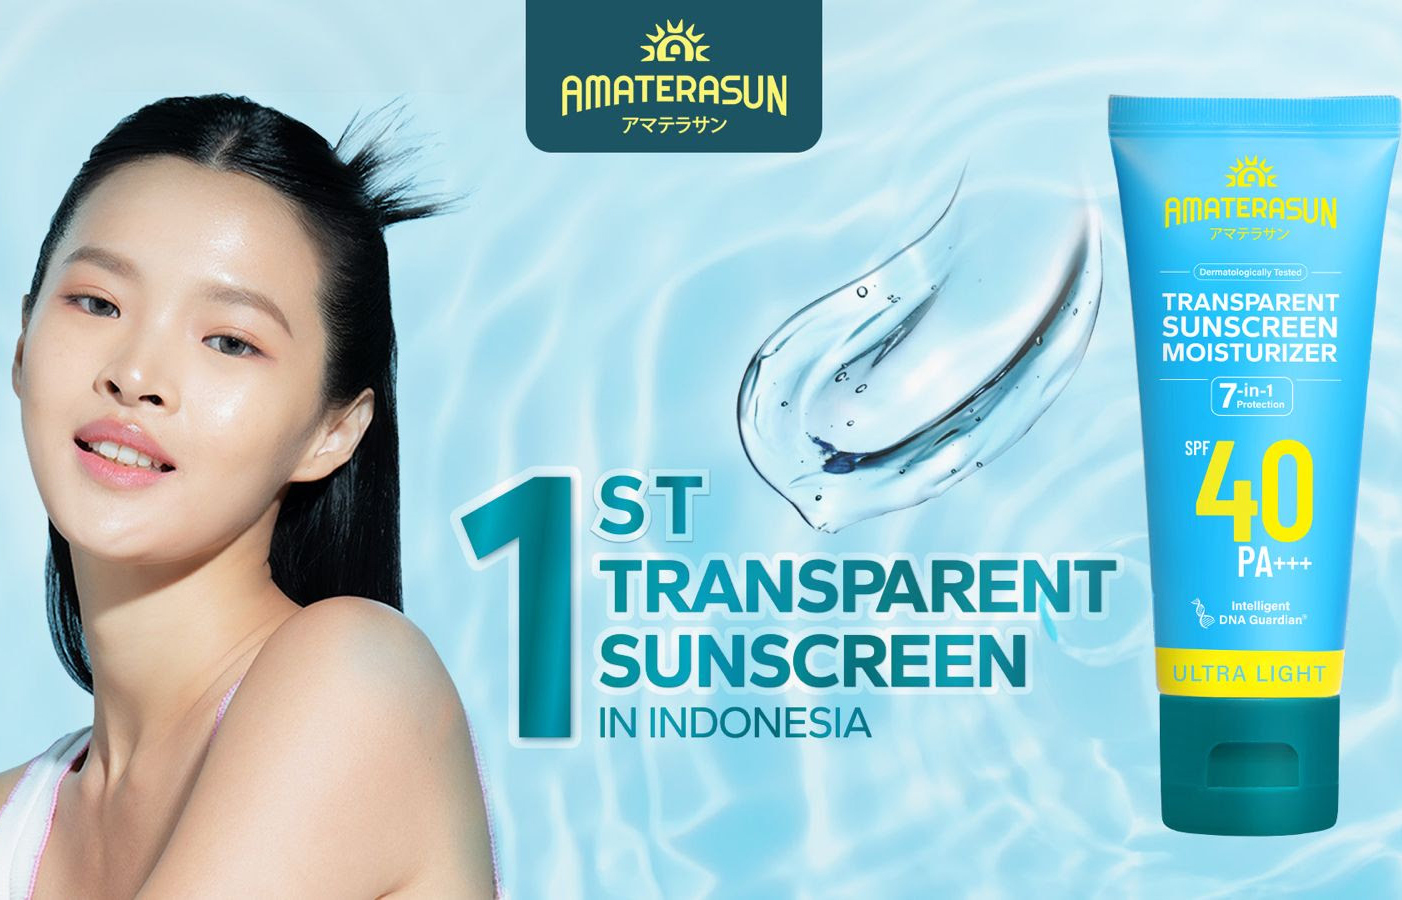 Amaterasun Meluncurkan Sunscreen Transparan Pertama di Indonesia dengan SPF 40